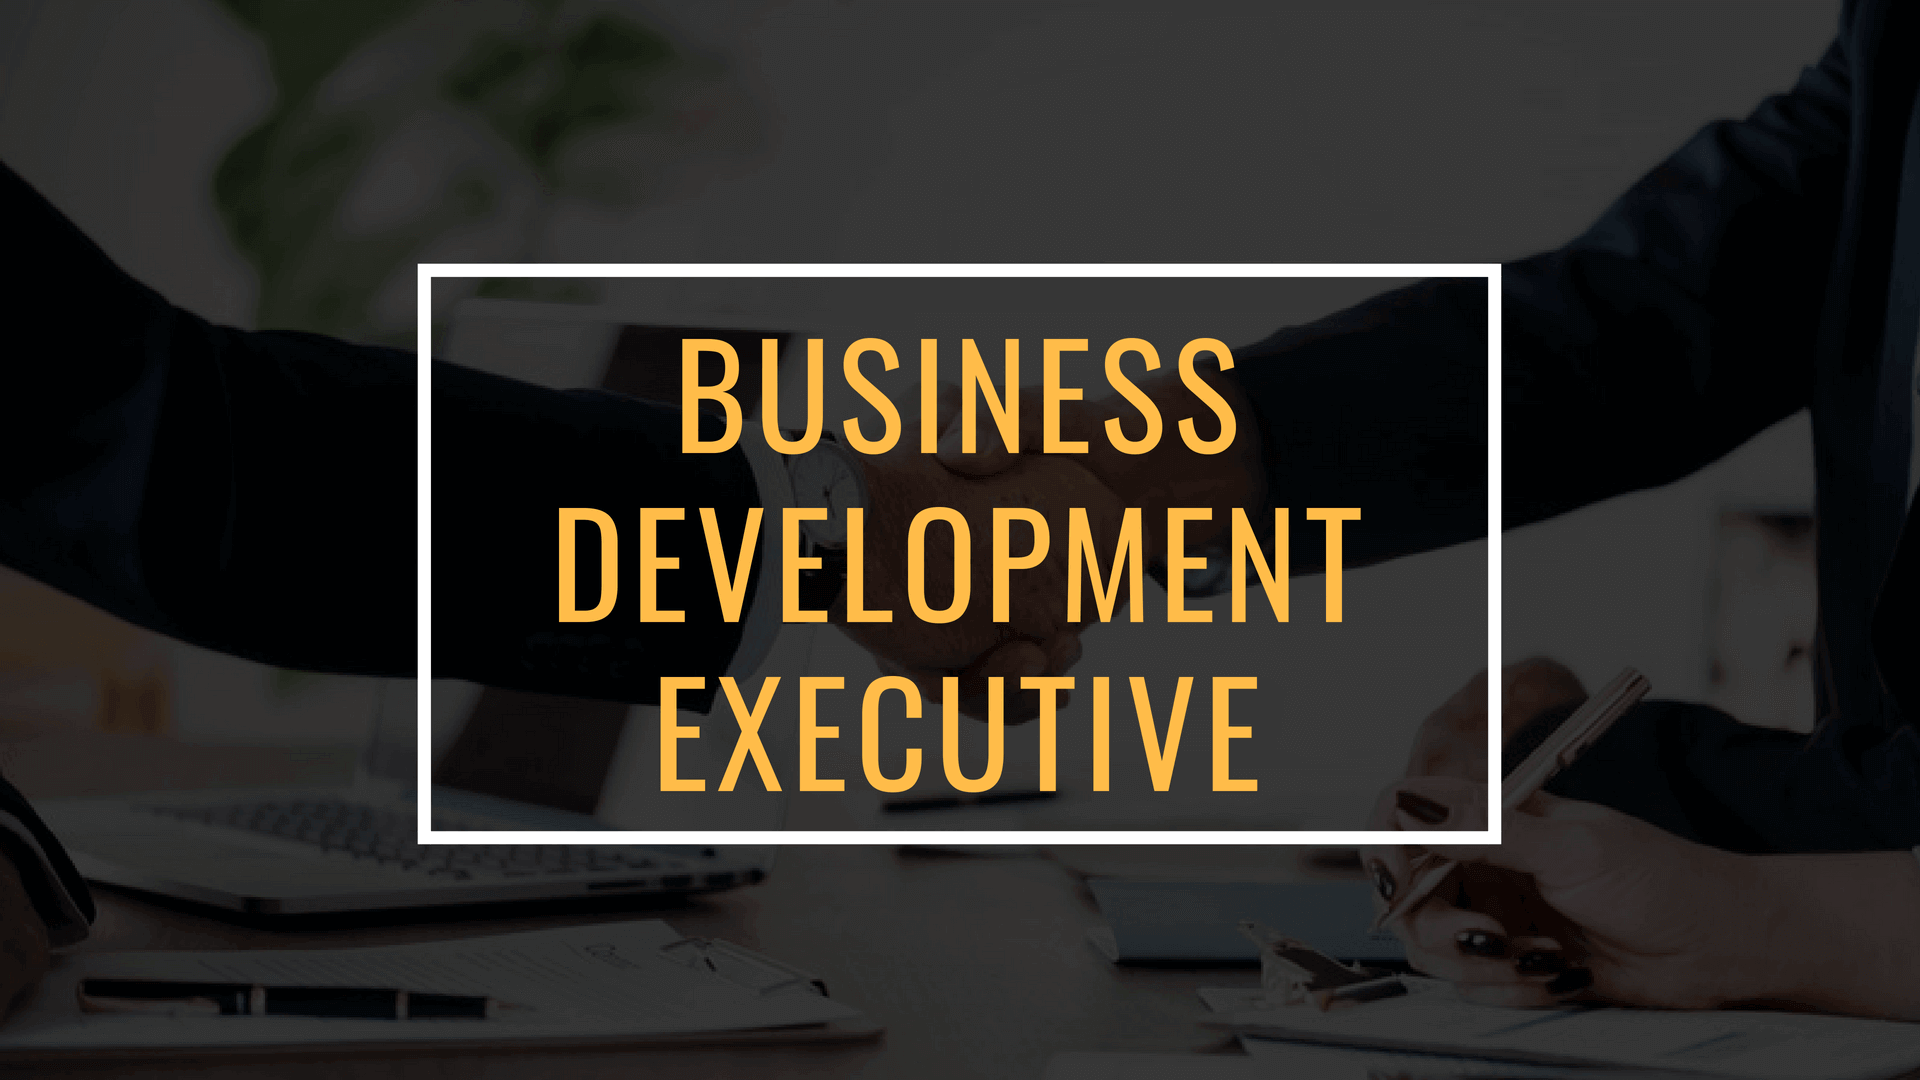 Business development executive là gì? 1